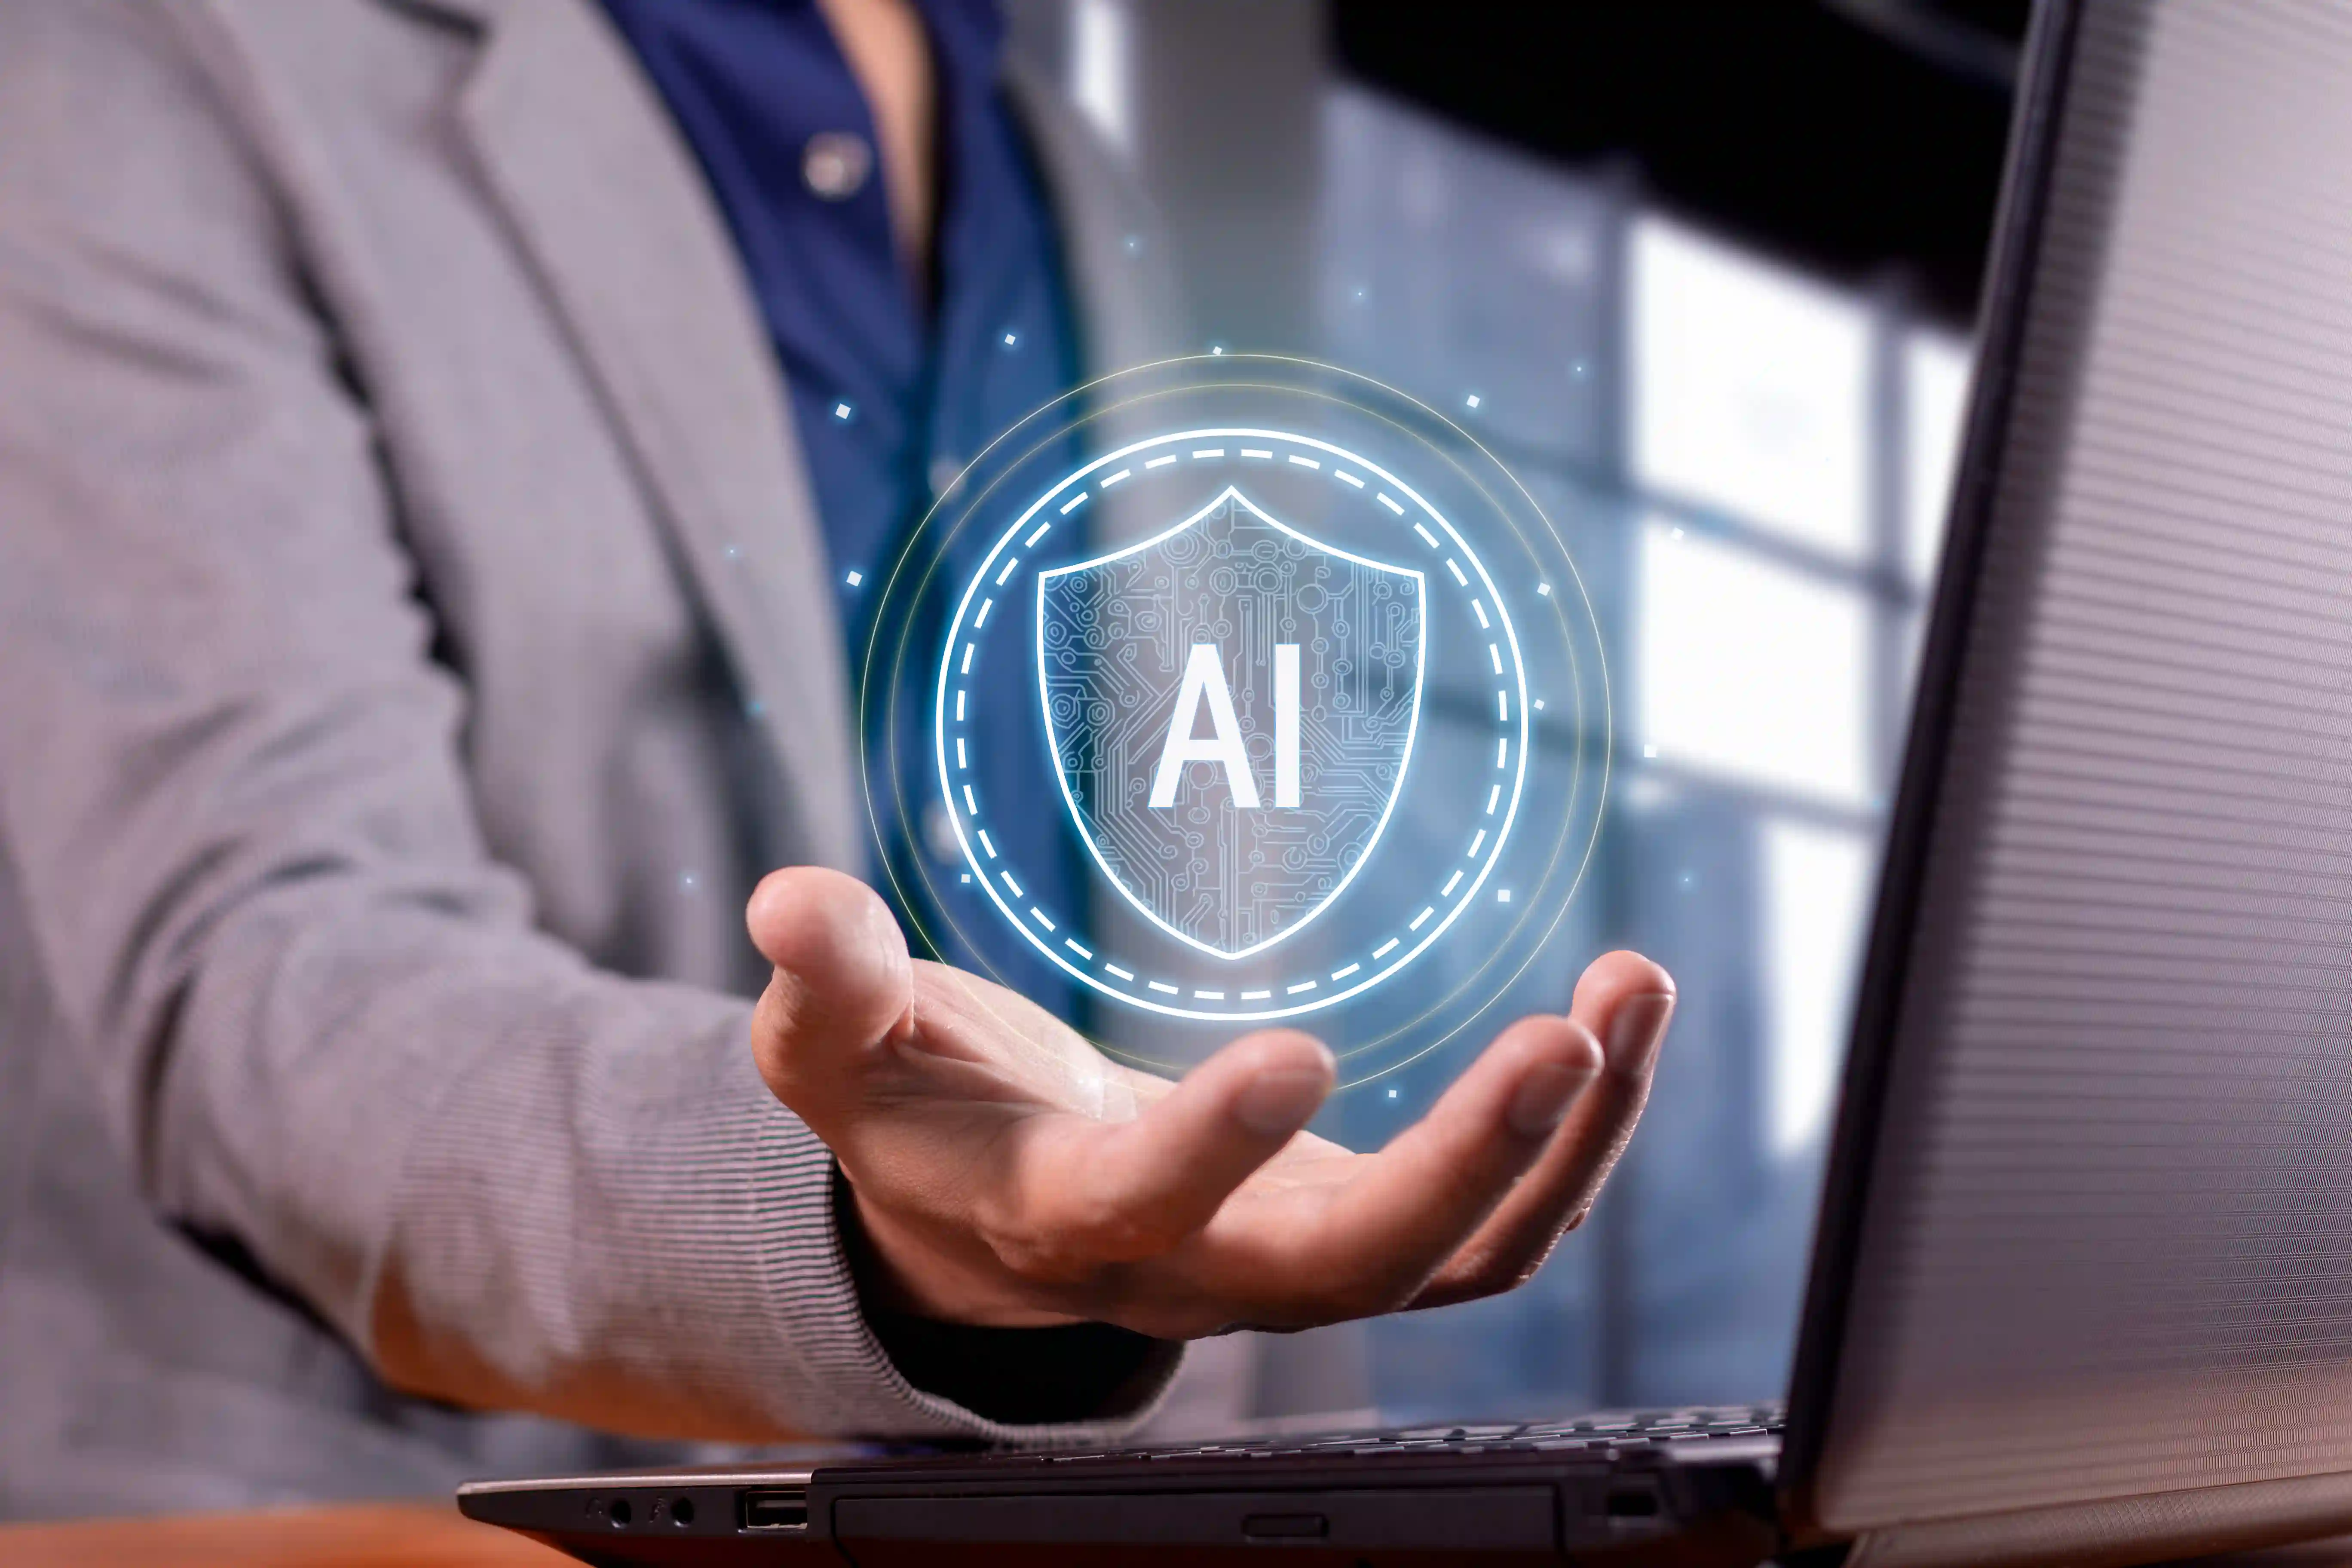 AI & Automation